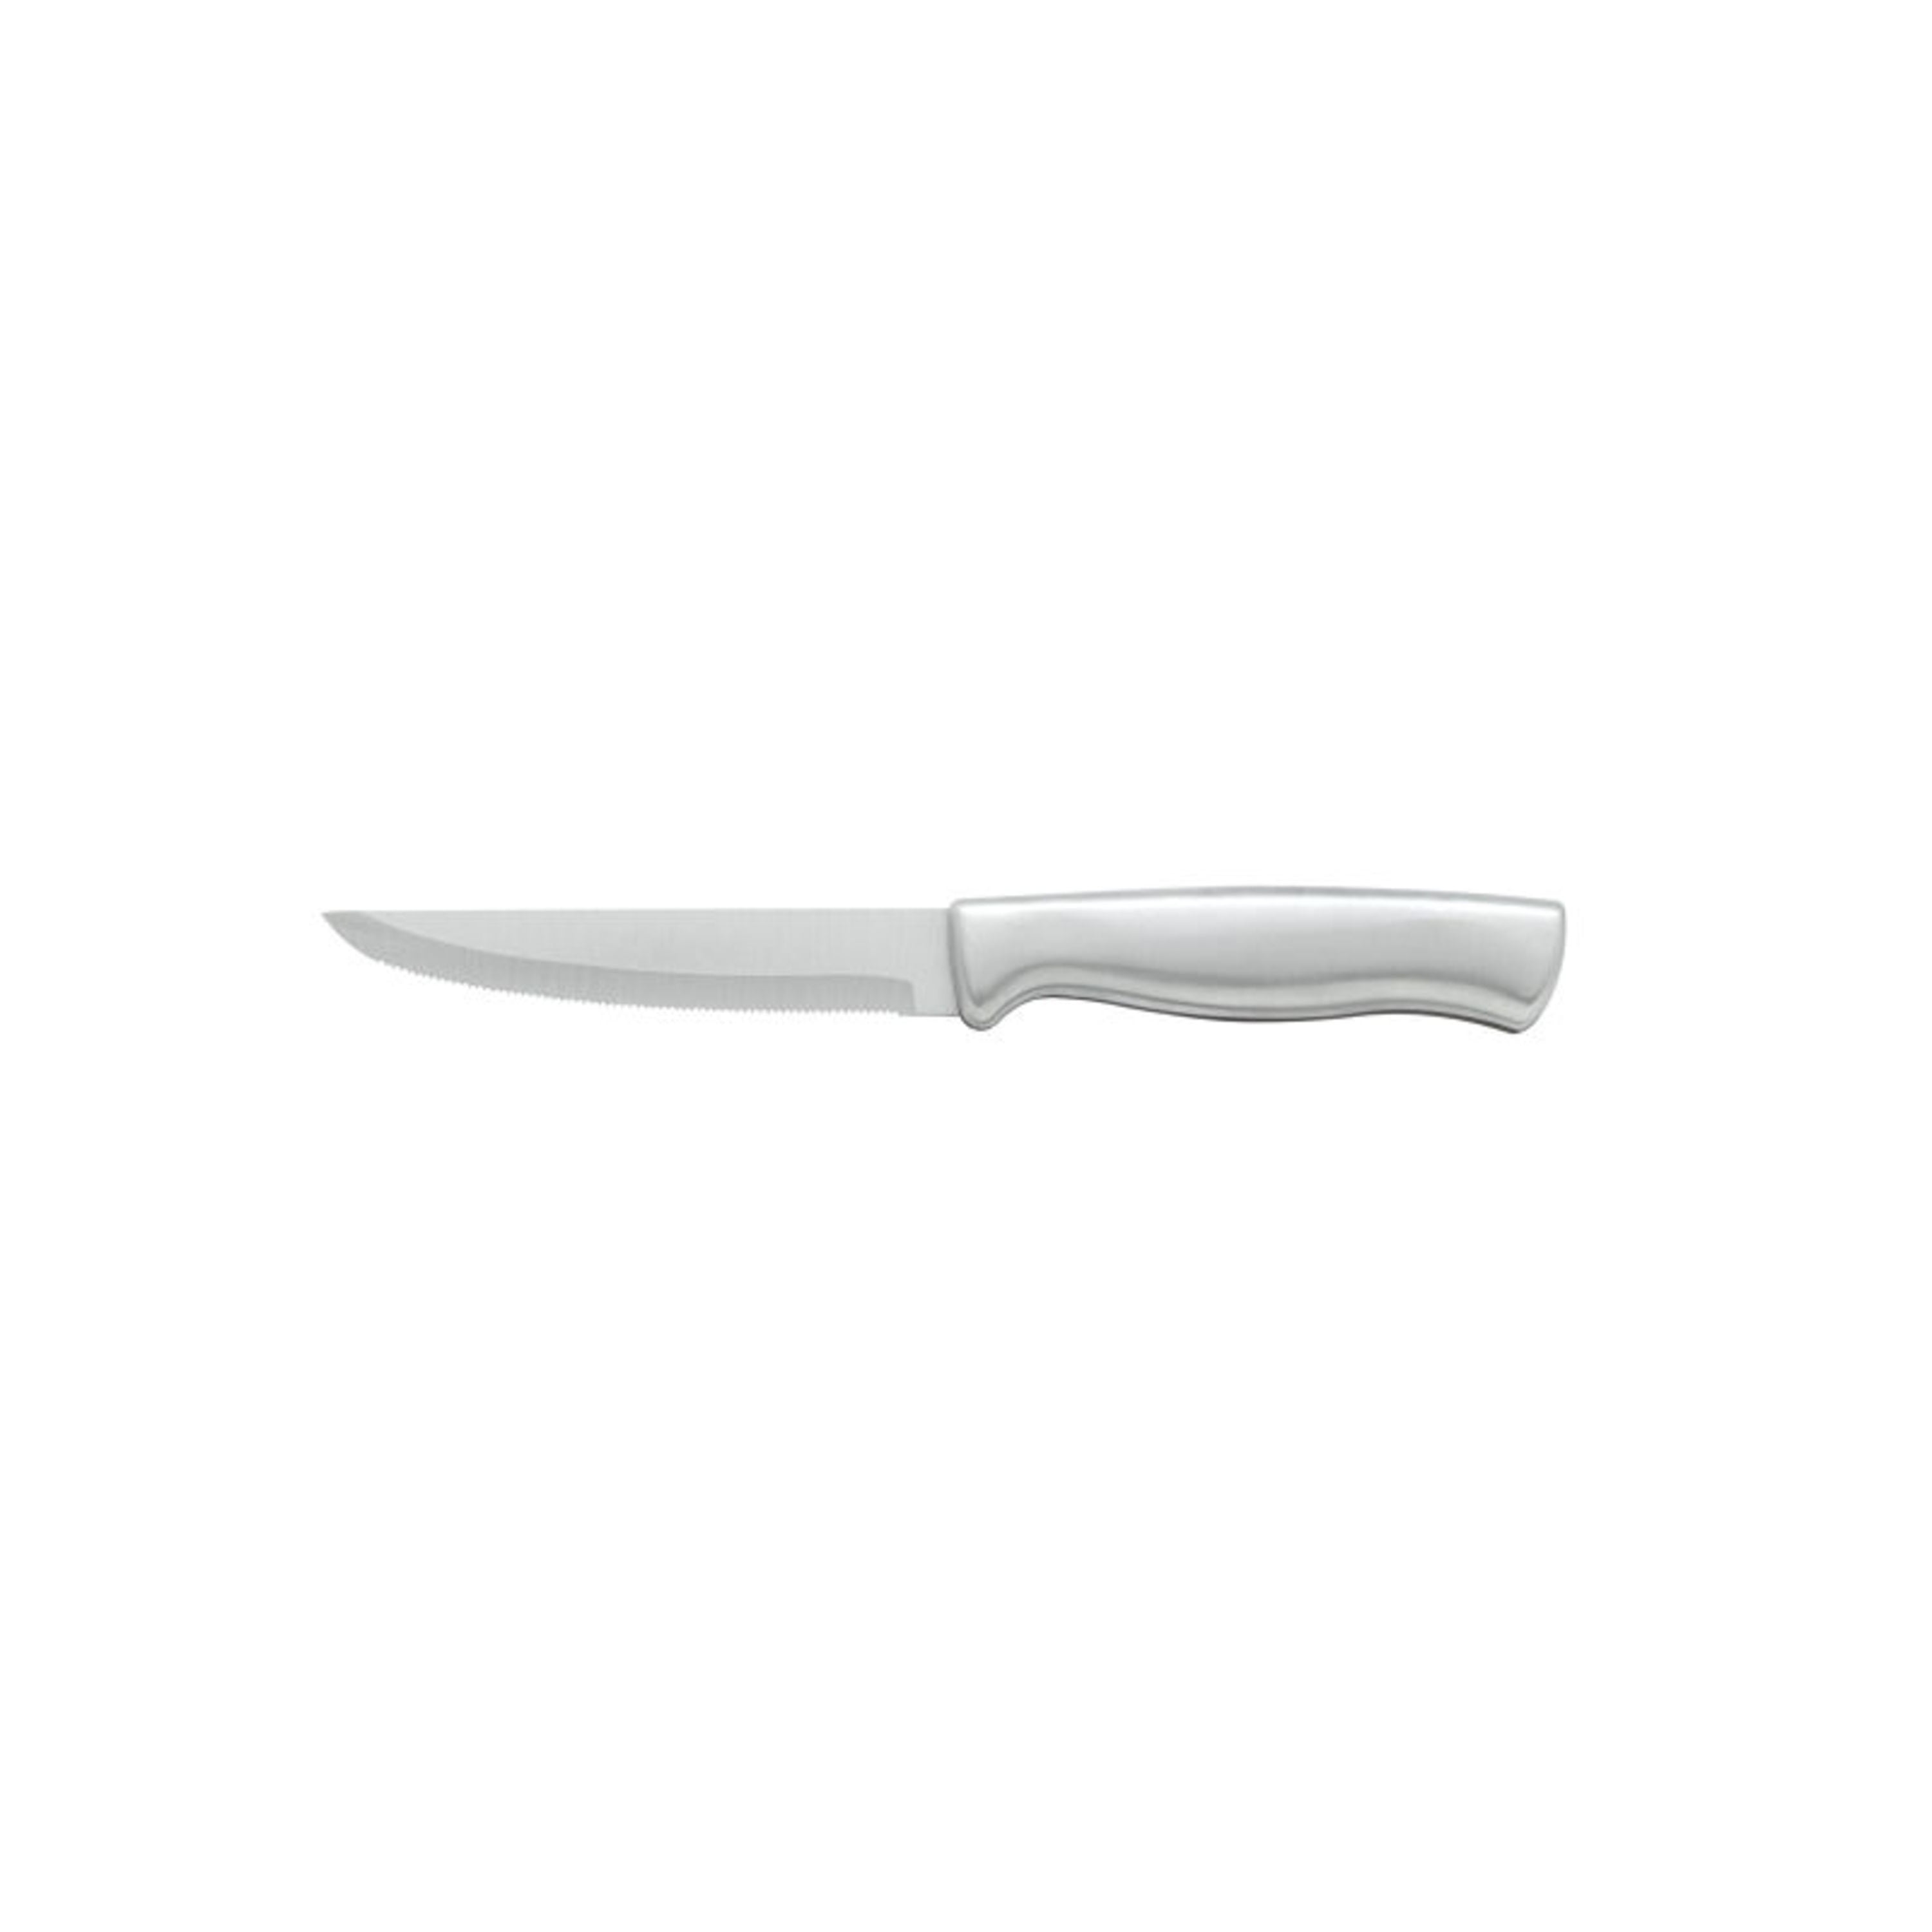 Farberware 12 pc. Stamped Stainless Steel Cutlery Set